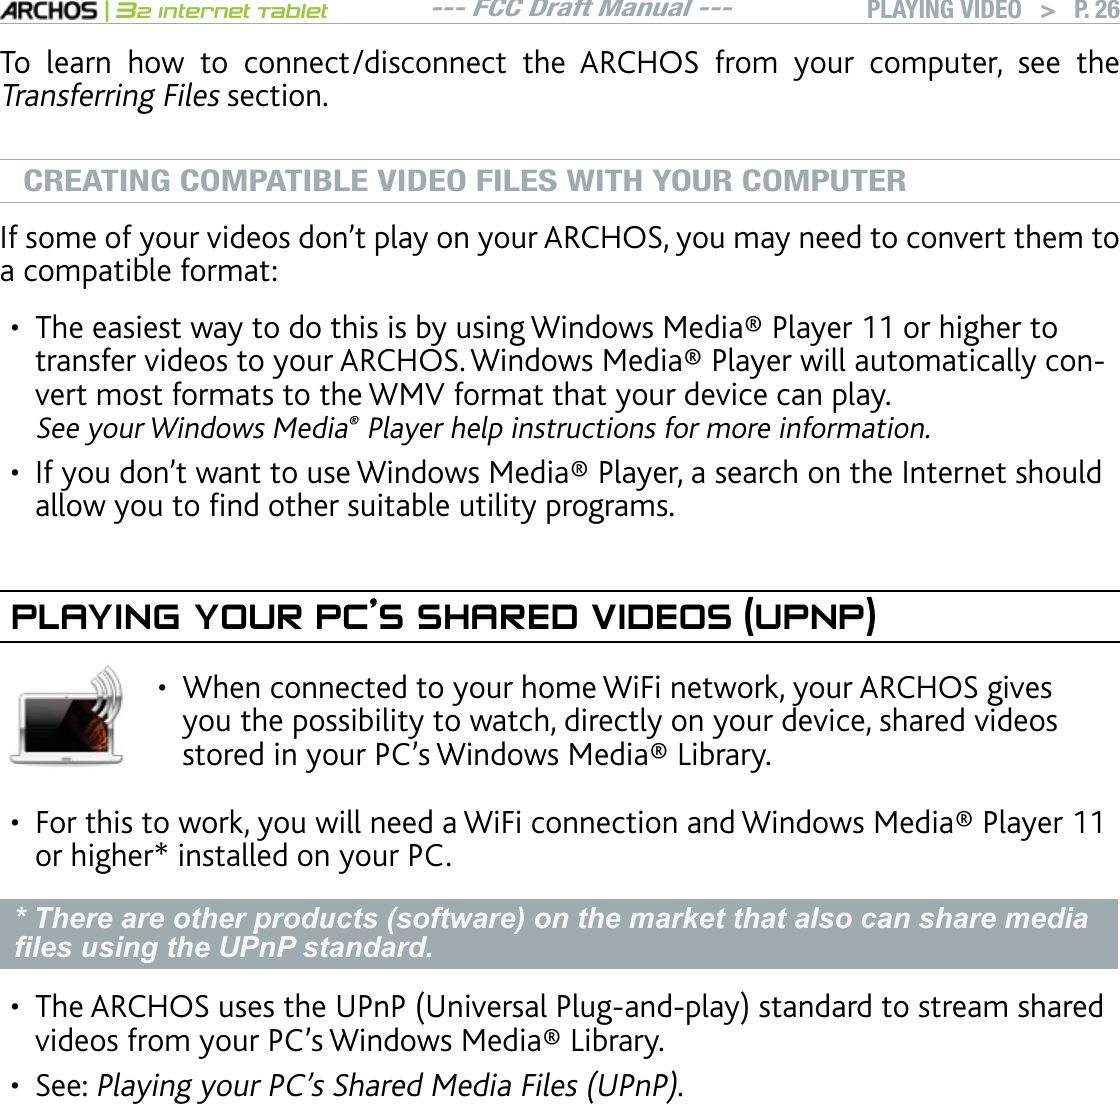 --- FCC Draft Manual ---|32 Internet TabletPLAYING VIDEO   &gt; P. 26To learn how to connect/disconnect the ARCHOS from your computer, see the Transferring Files section.CREATING COMPATIBLE VIDEO FILES WITH YOUR COMPUTER+HUQOGQH[QWTXKFGQUFQPlVRNC[QP[QWT#4%*15[QWOC[PGGFVQEQPXGTVVJGOVQa compatible format:6JGGCUKGUVYC[VQFQVJKUKUD[WUKPI9KPFQYU/GFKC2NC[GTQTJKIJGTVQVTCPUHGTXKFGQUVQ[QWT#4%*159KPFQYU/GFKC2NC[GTYKNNCWVQOCVKECNN[EQPvert most formats to the WMV format that your device can play. See your Windows Media Player help instructions for more information.+H[QWFQPlVYCPVVQWUG9KPFQYU/GFKC2NC[GTCUGCTEJQPVJG+PVGTPGVUJQWNFCNNQY[QWVQÒPFQVJGTUWKVCDNGWVKNKV[RTQITCOUPLAYING YOUR PC’S SHARED VIDEOS (UPNP)When connected to your home WiFi network, your ARCHOS gives you the possibility to watch, directly on your device, shared videos UVQTGFKP[QWT2%lU9KPFQYU/GFKC.KDTCT[•(QTVJKUVQYQTM[QWYKNNPGGFC9K(KEQPPGEVKQPCPF9KPFQYU/GFKC2NC[GTor higher* installed on your PC.* There are other products (software) on the market that also can share media ¿OHVXVLQJWKH83Q3VWDQGDUG6JG#4%*15WUGUVJG72P27PKXGTUCN2NWICPFRNC[UVCPFCTFVQUVTGCOUJCTGFXKFGQUHTQO[QWT2%lU9KPFQYU/GFKC.KDTCT[See: 2NC[KPI[QWT2%lU5JCTGF/GFKC(KNGU72P2. If you cannot install Windows Media® Player 11 or higher, it is possible to ac-FHVVDQGVWUHDP\RXU3&amp;¶V¿OHVIURPWKH$5&amp;+26)LOH%URZVHU6HHBrowsingOther Computers on the Network.•••••